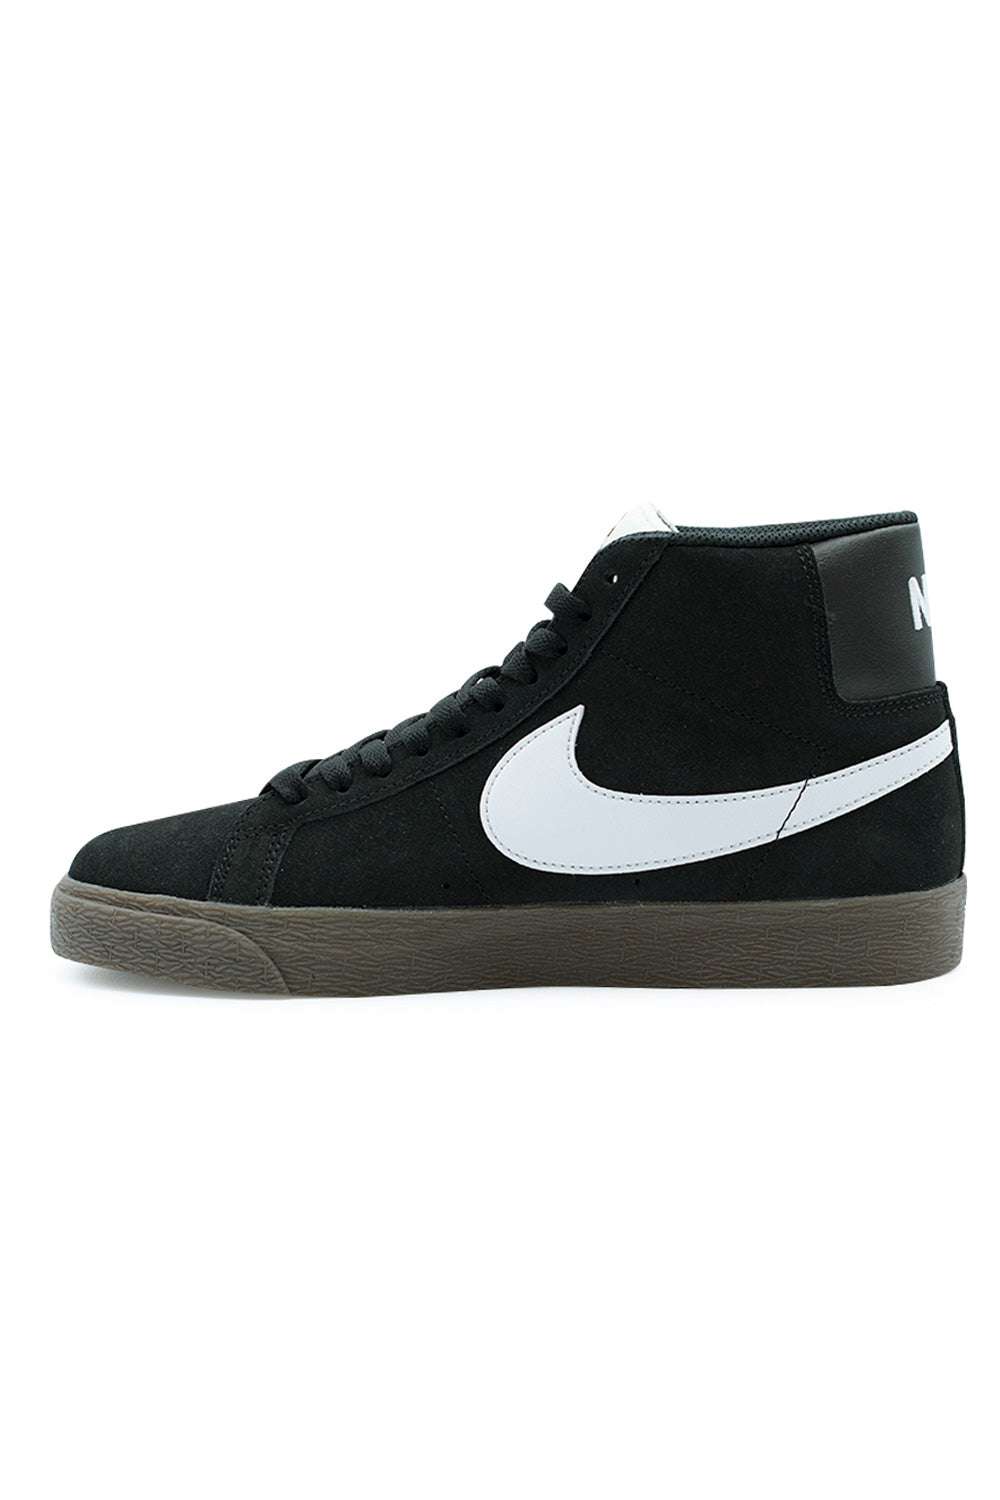 Nike SB Zoom Blazer Mid Shoe Black / White / Black / Sail - BONKERS